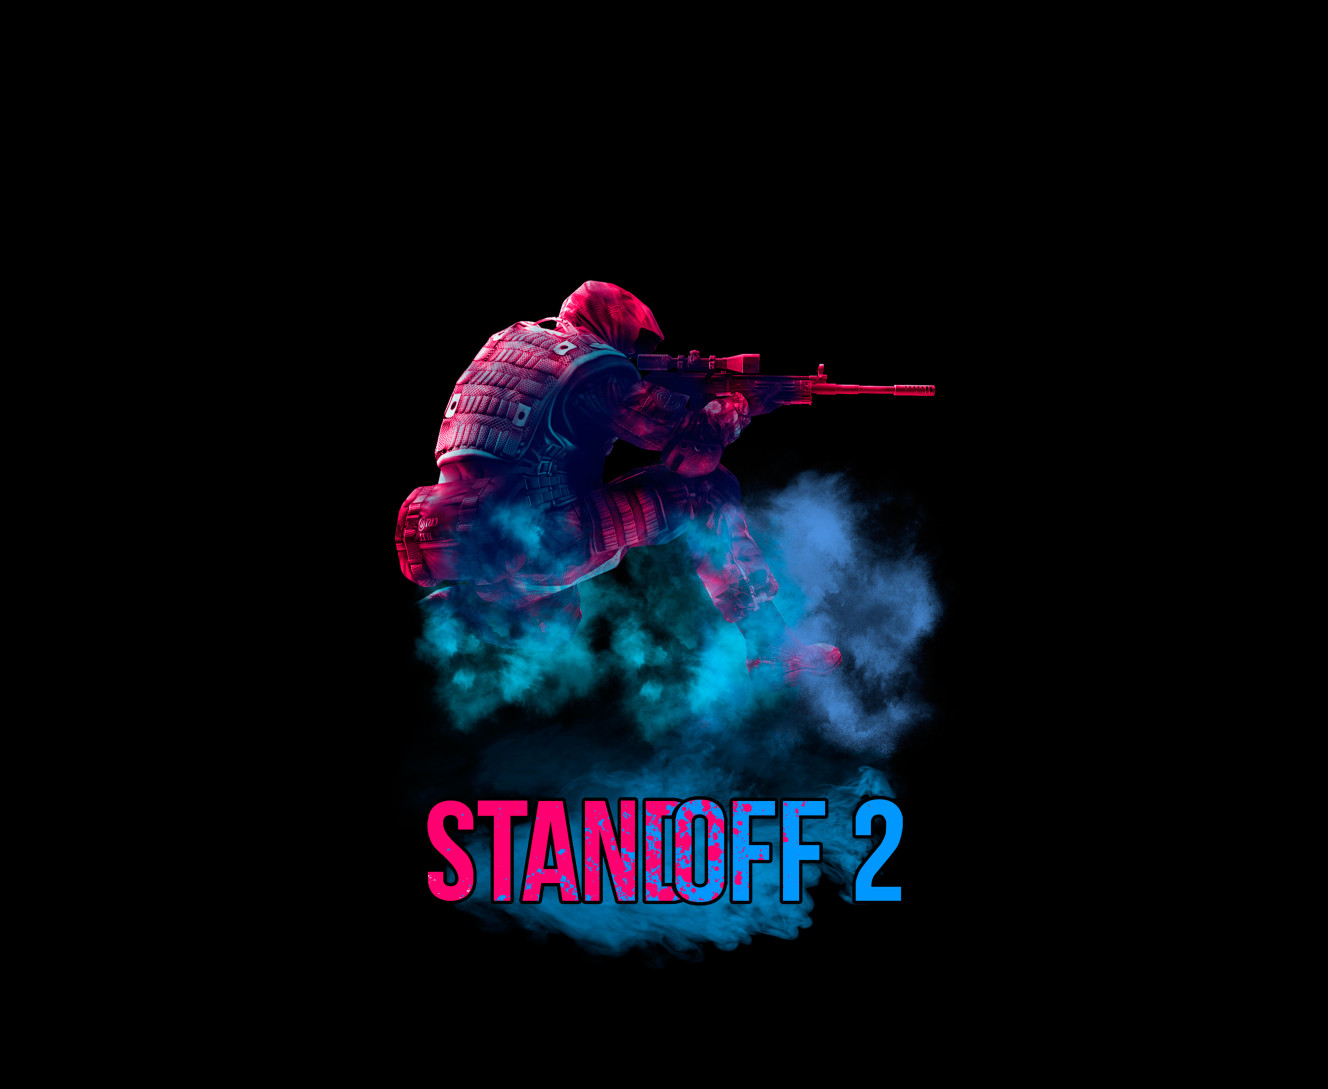 Standoff 2 [7]